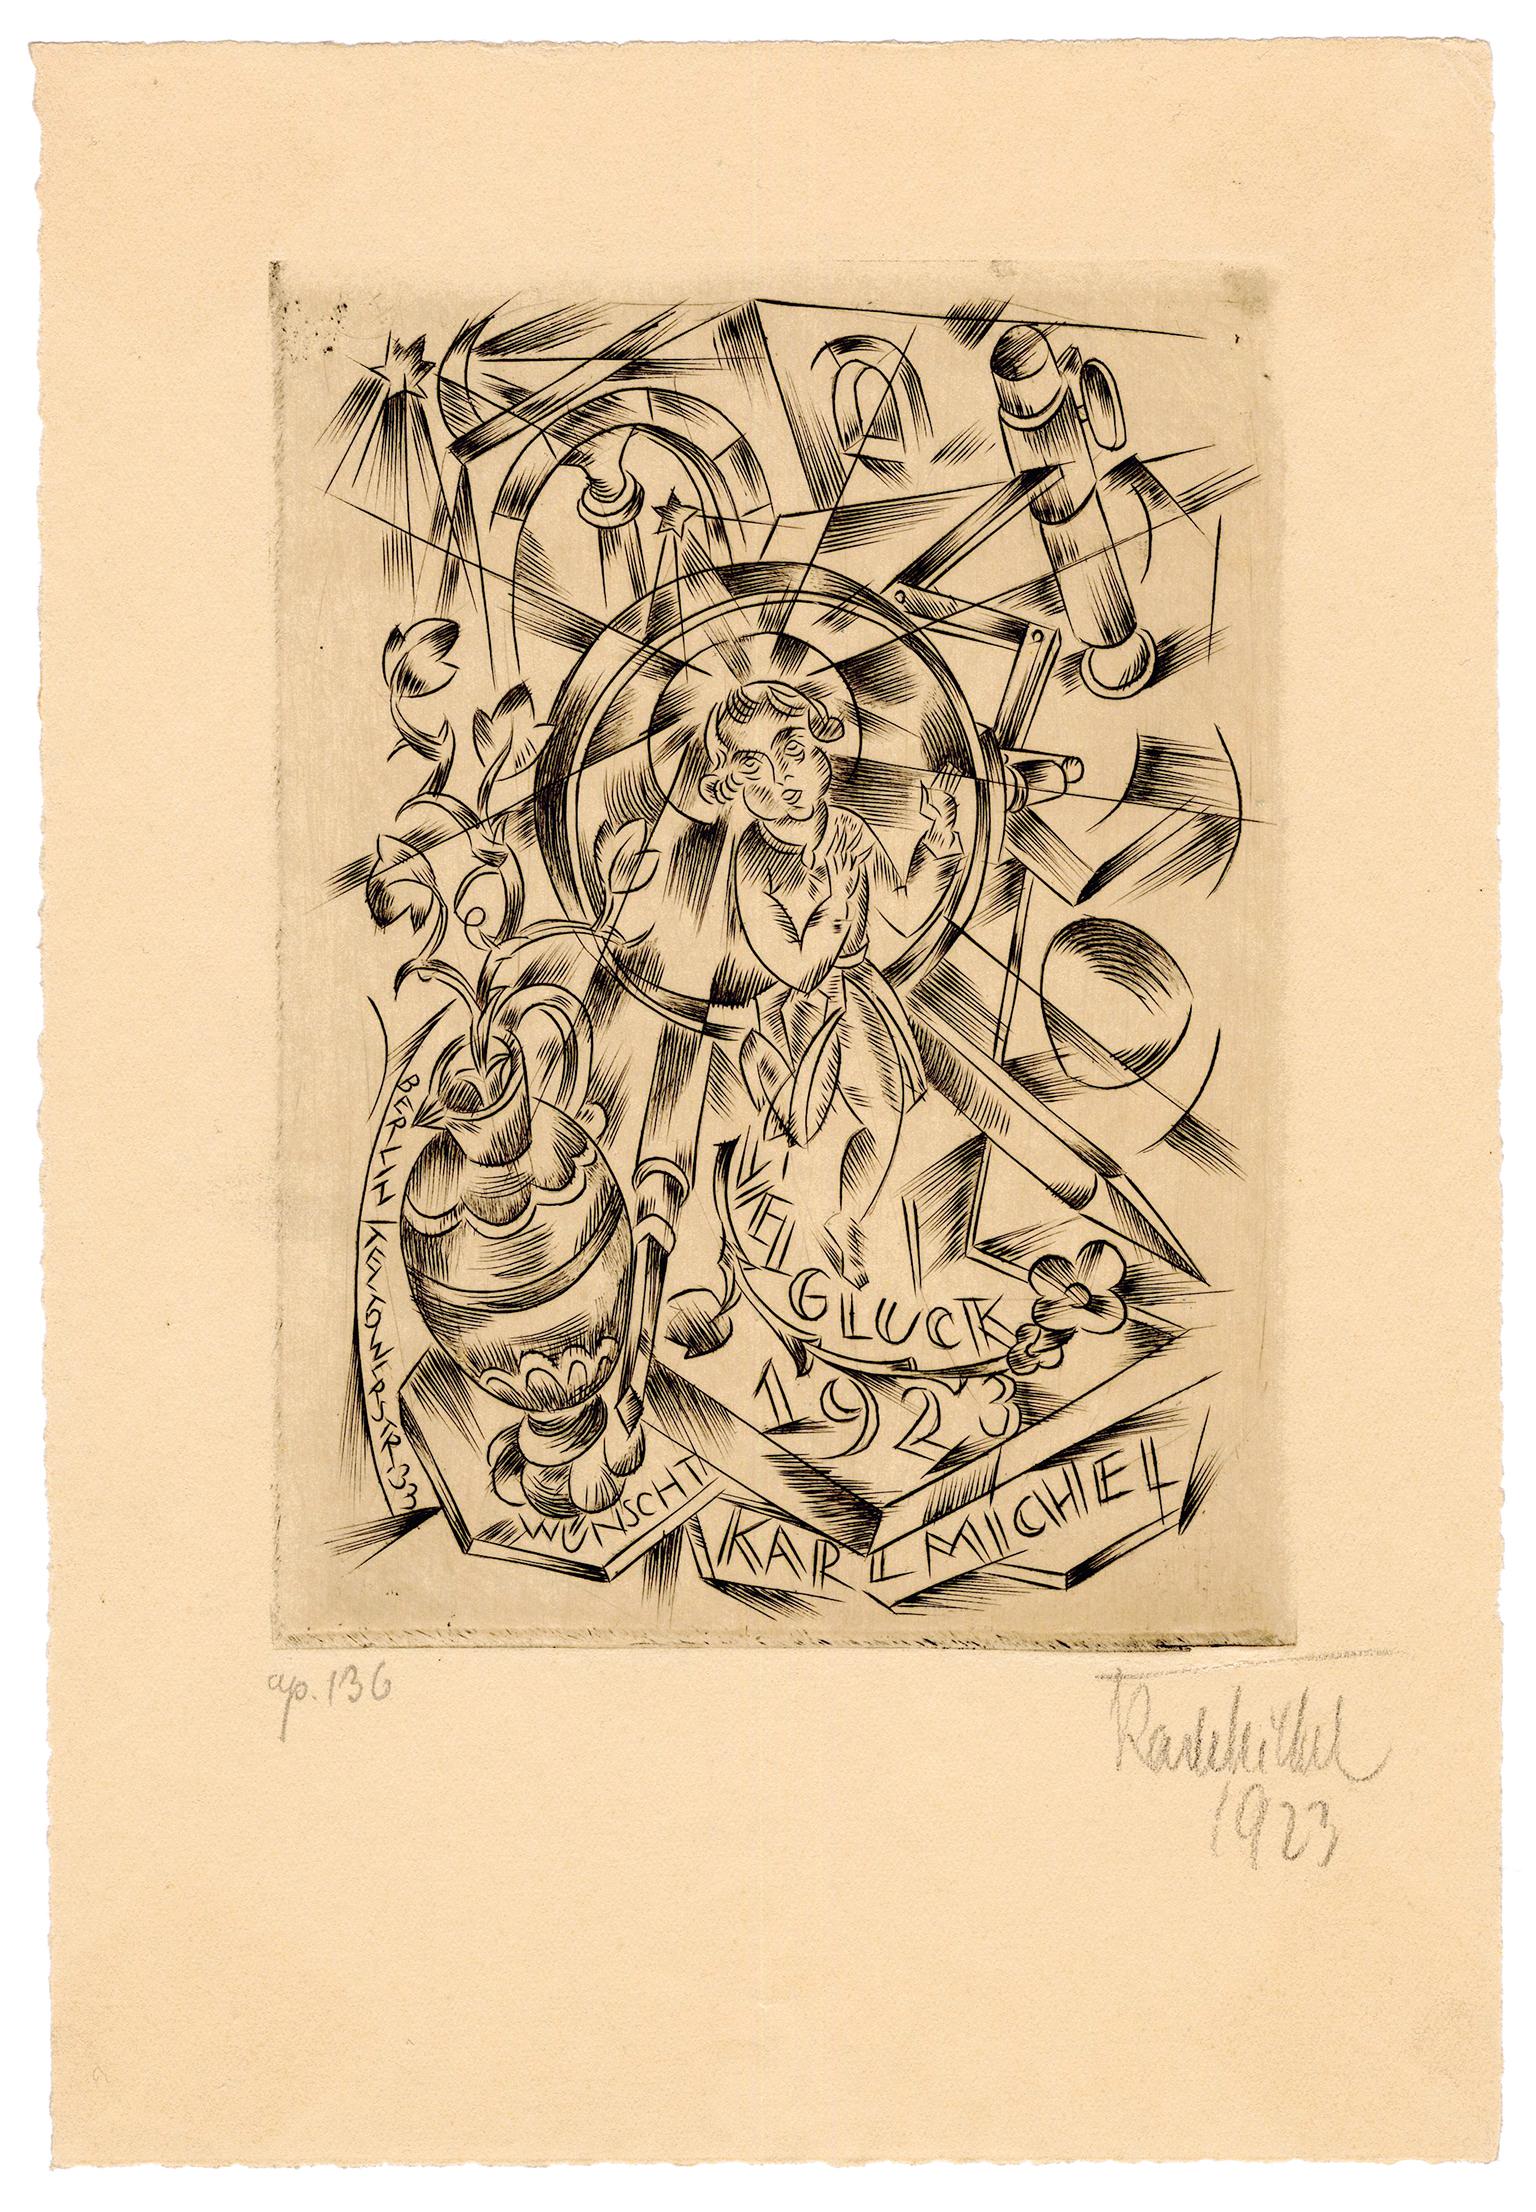 'Viel Gluck 1923'  — New Year's Greeting - 1920s German Expressionism - Print by Karl Michel